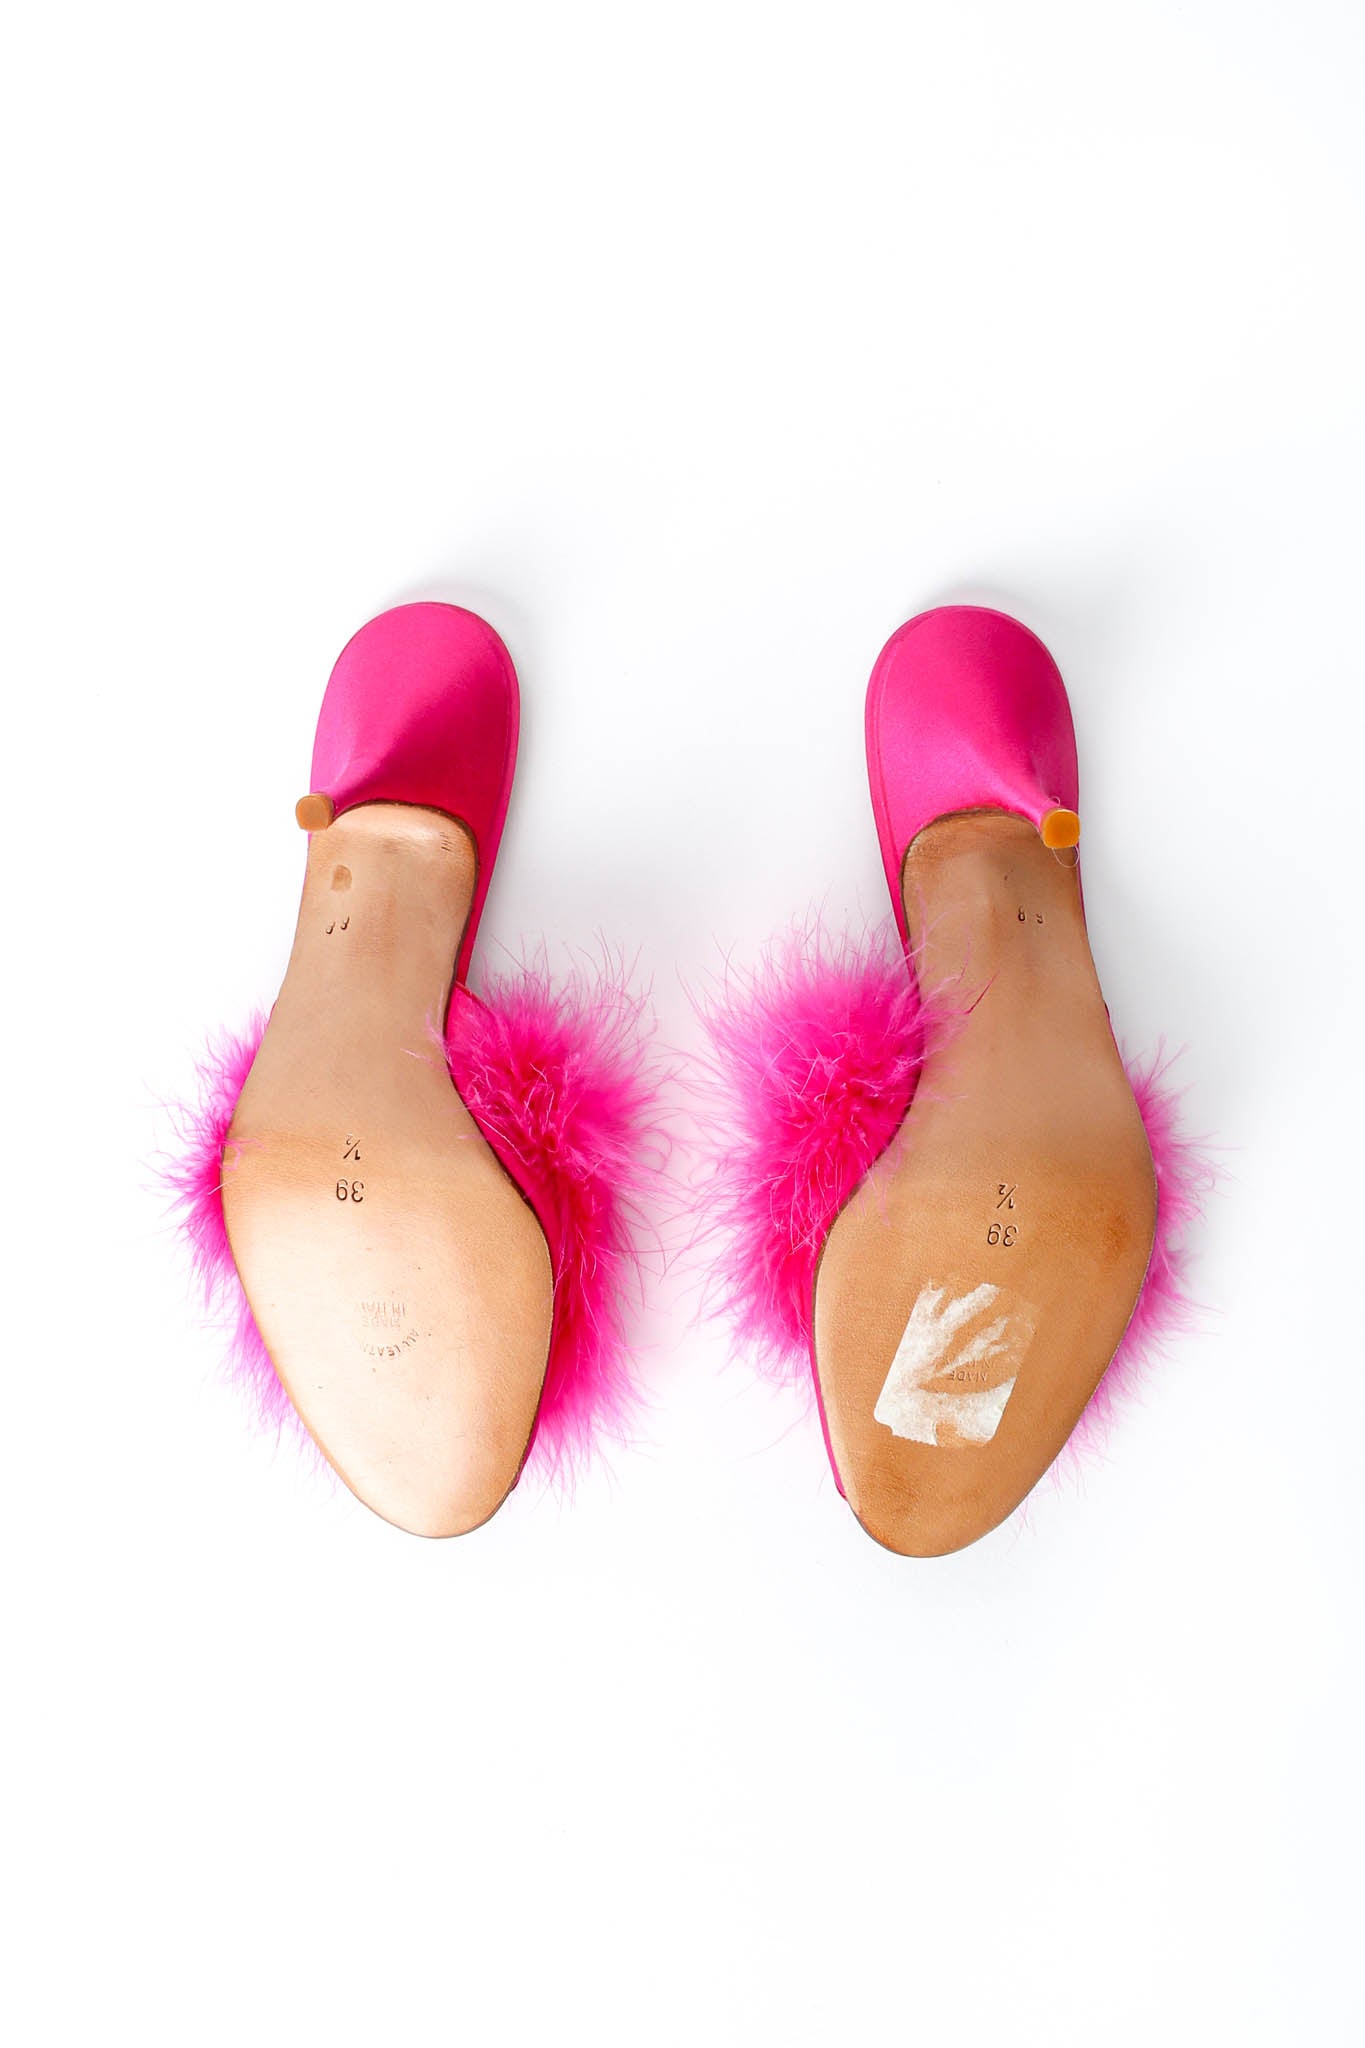 Vintage Maud Frizon Shocking Pink Marabou Mules soles at Recess Los Angeles